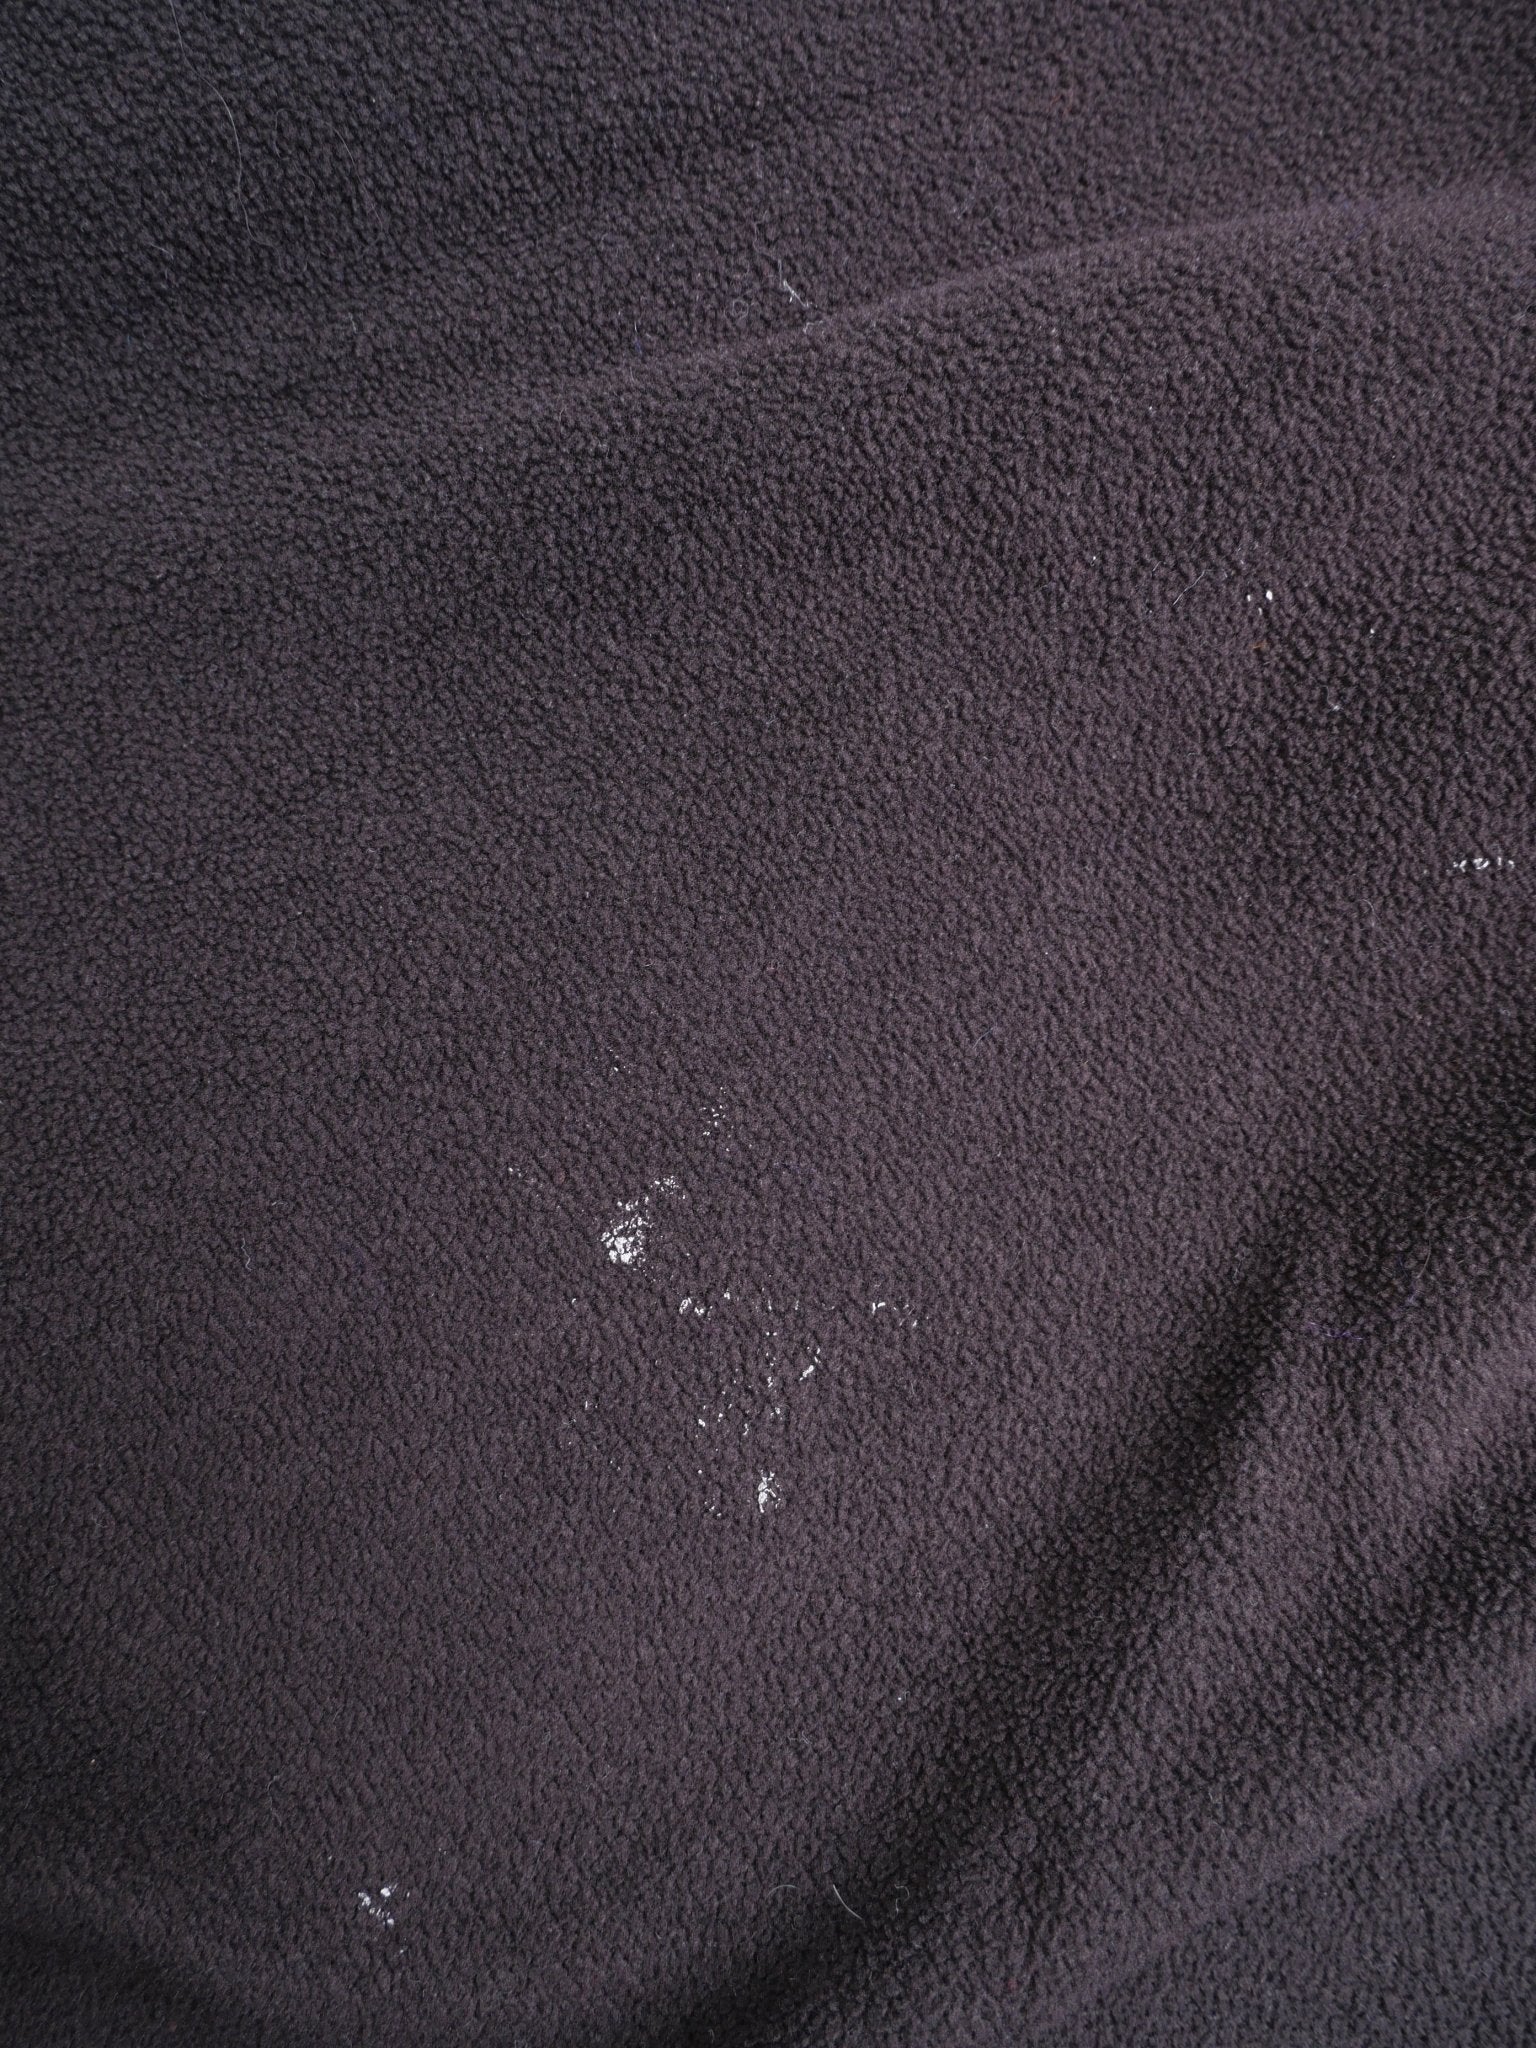 Starter embroidere Logo black Fleece Zip Sweater - Peeces